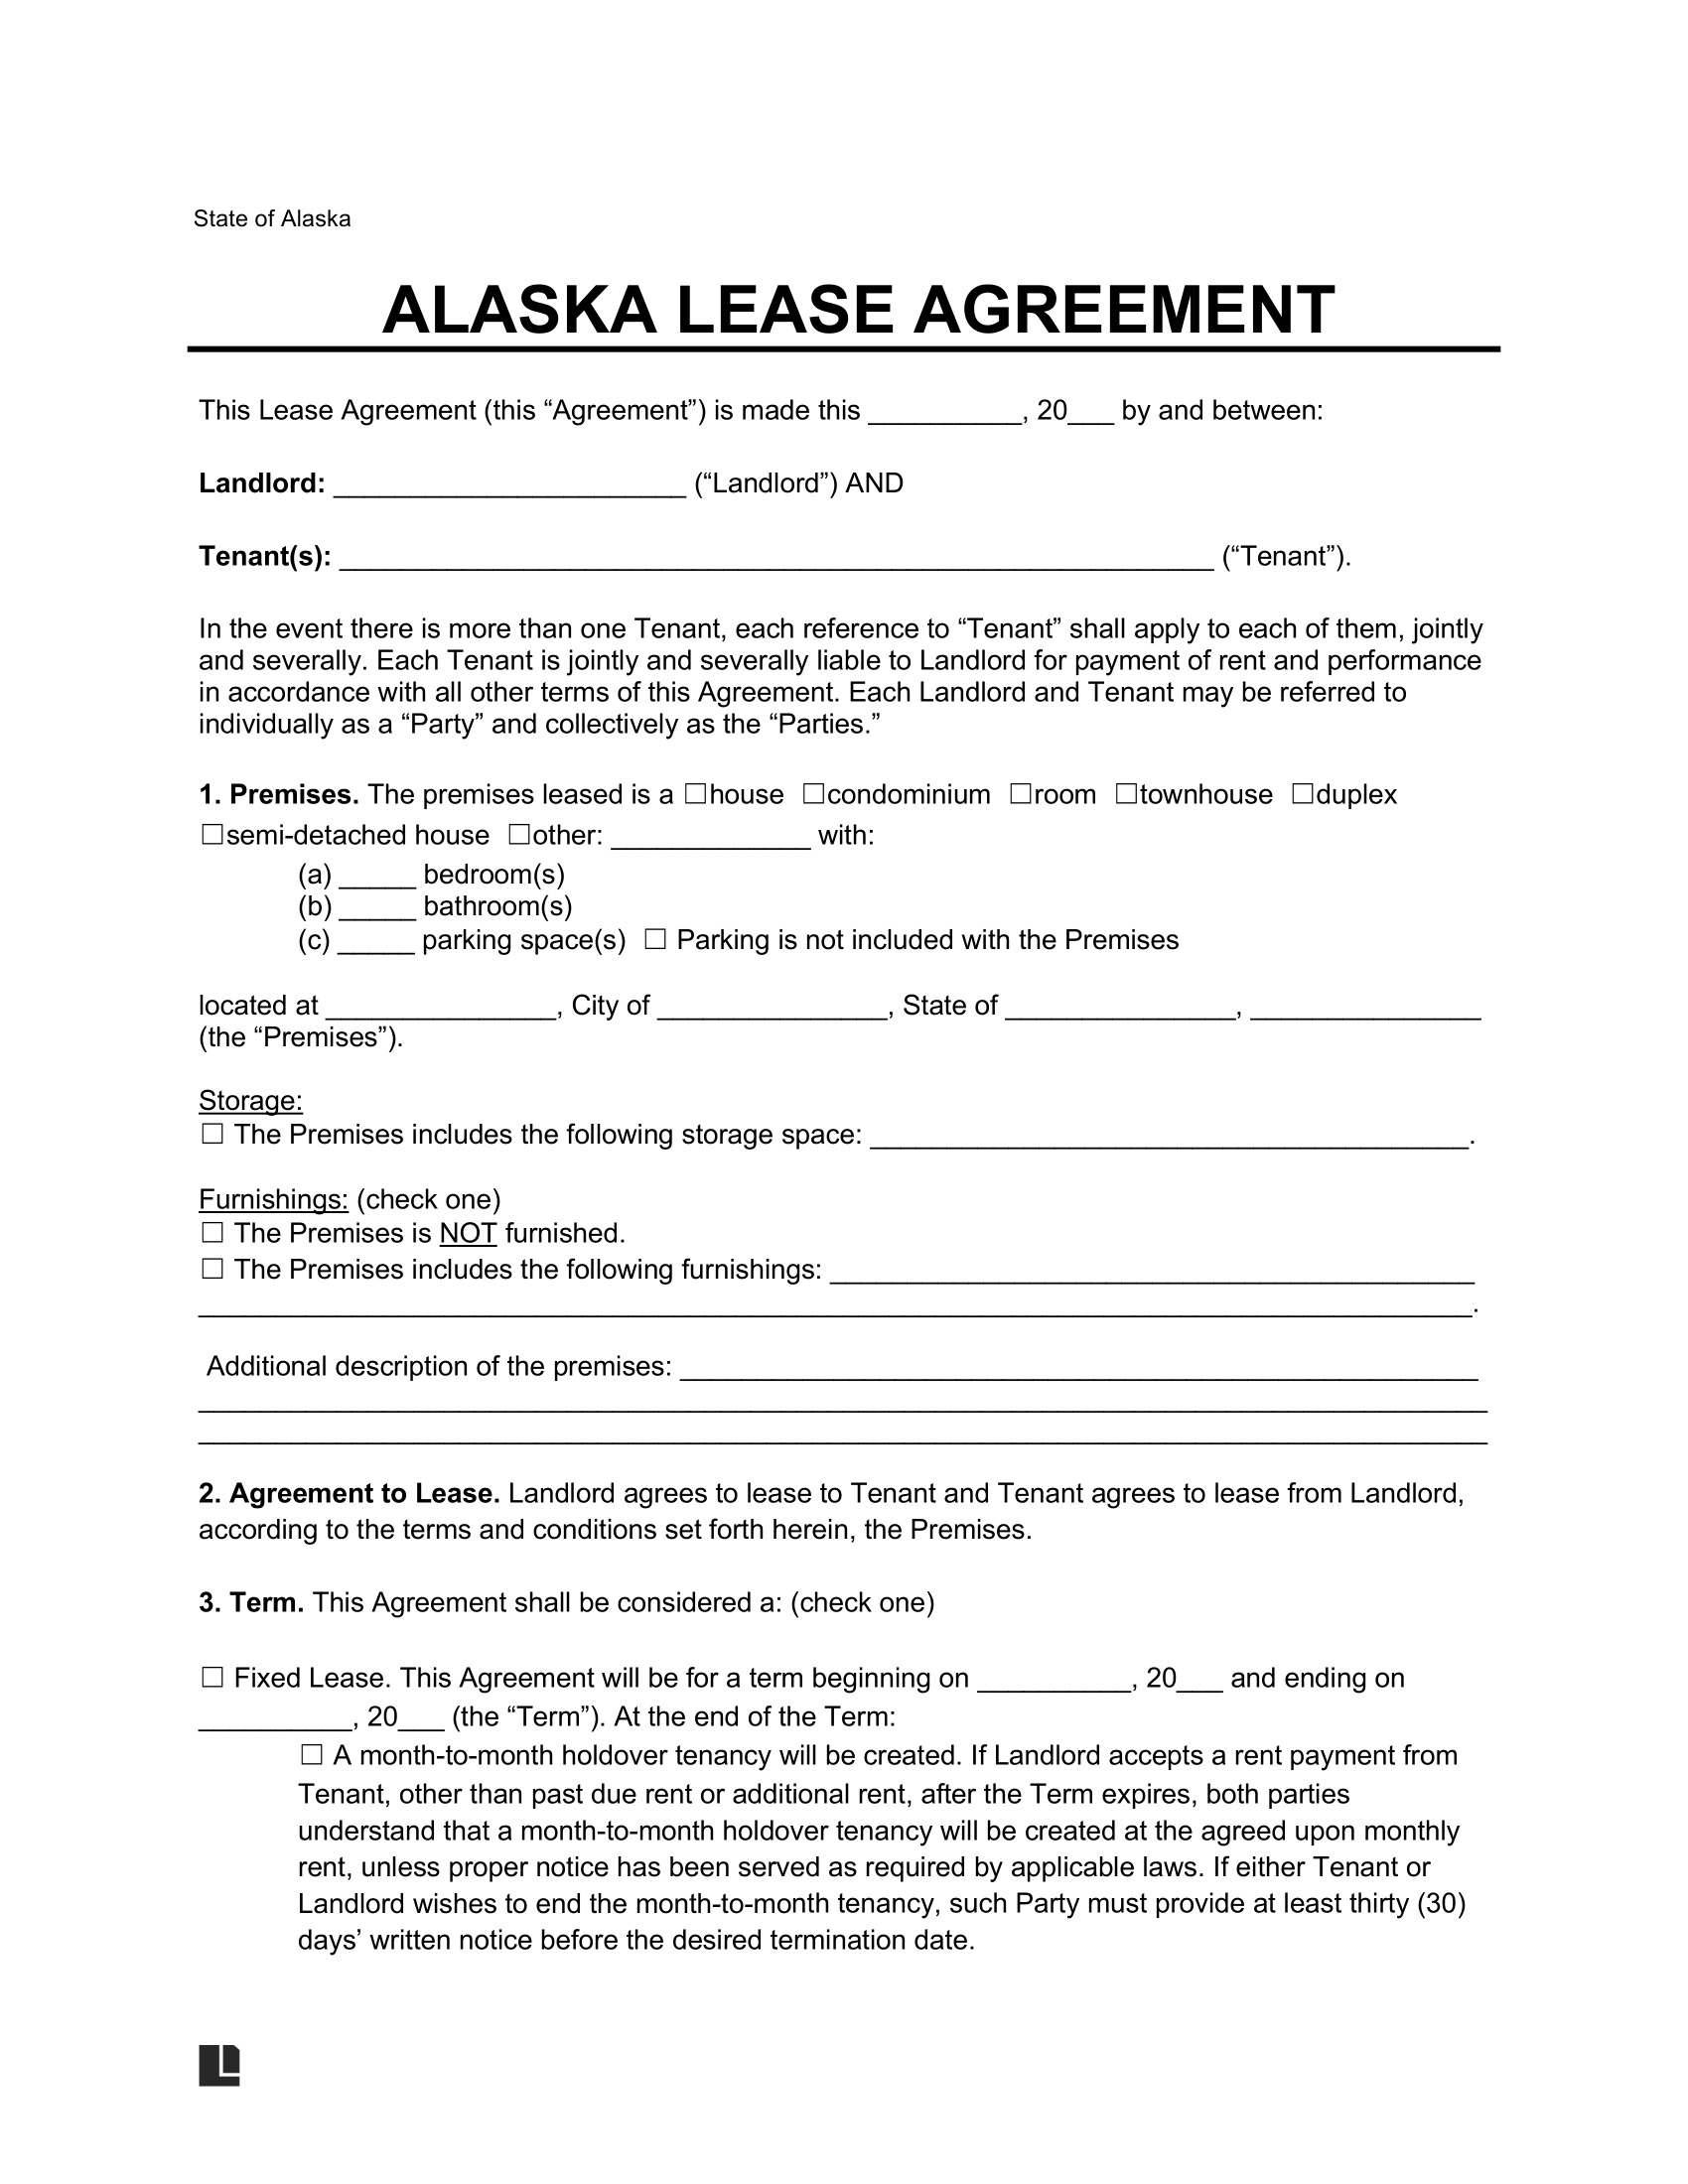 alaska lease agreement